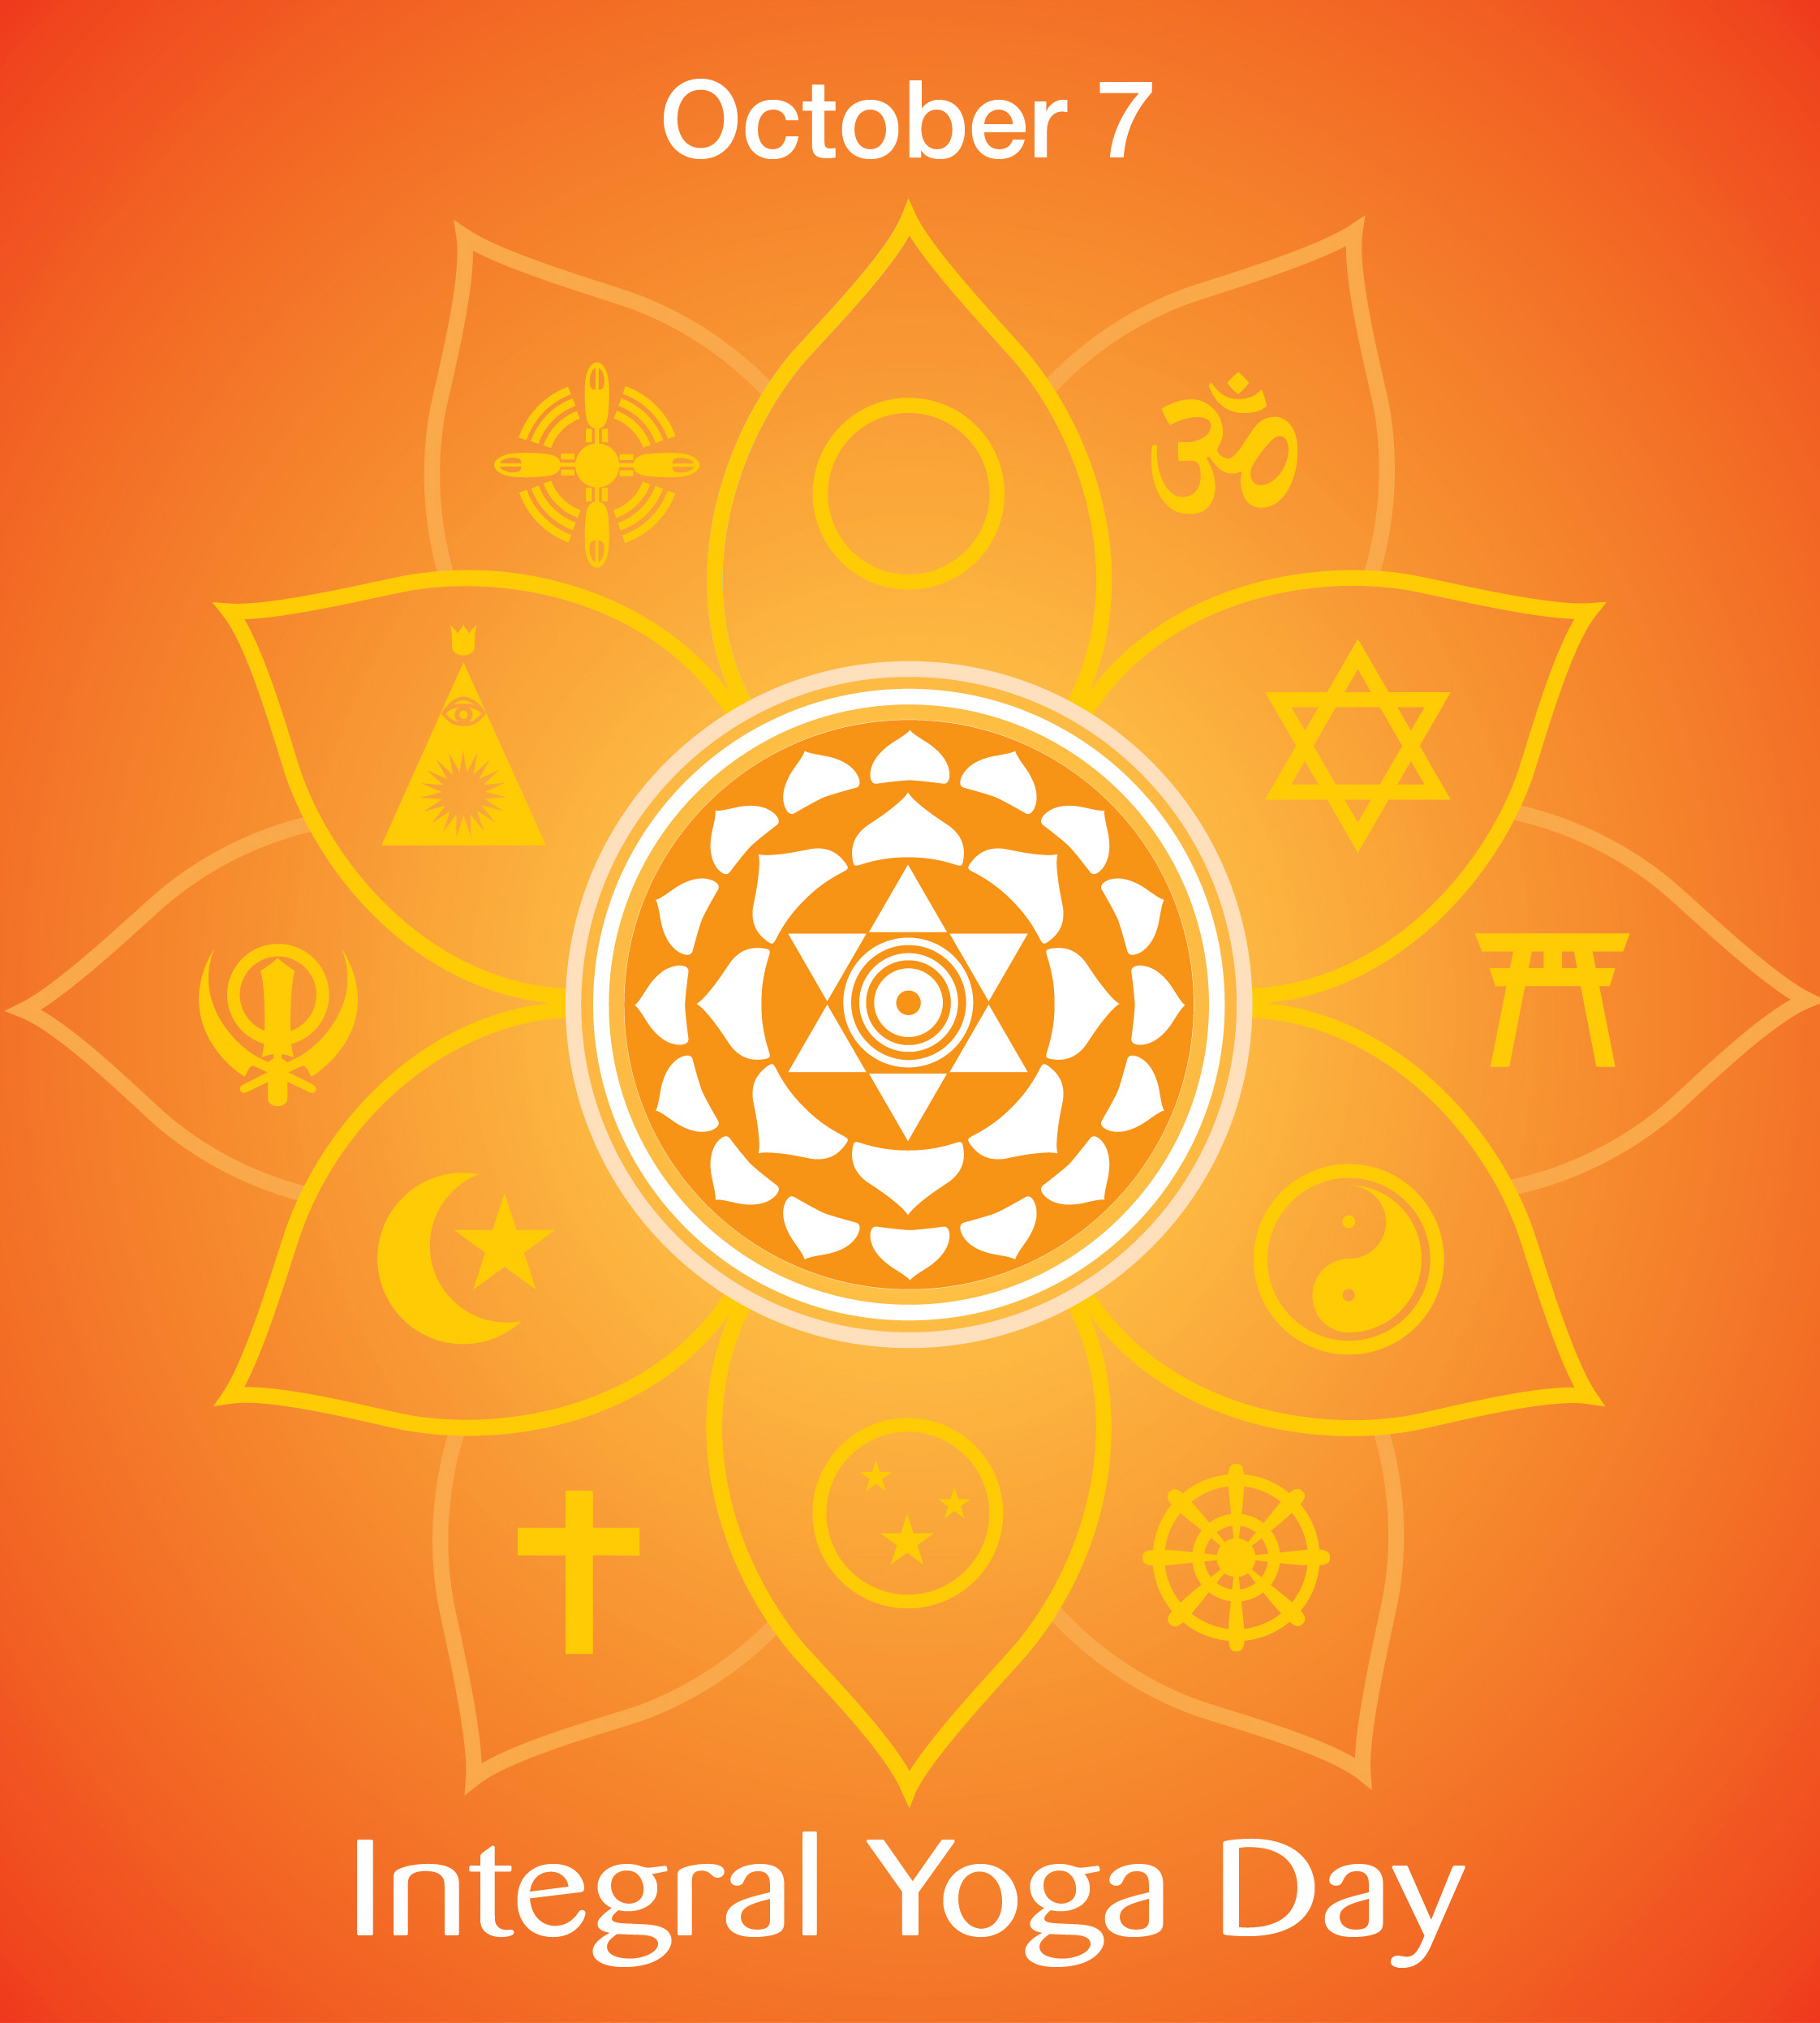 https://integralyoga.org/wp-content/uploads/2018/09/Integral-Yoga-Day-Logo.jpg